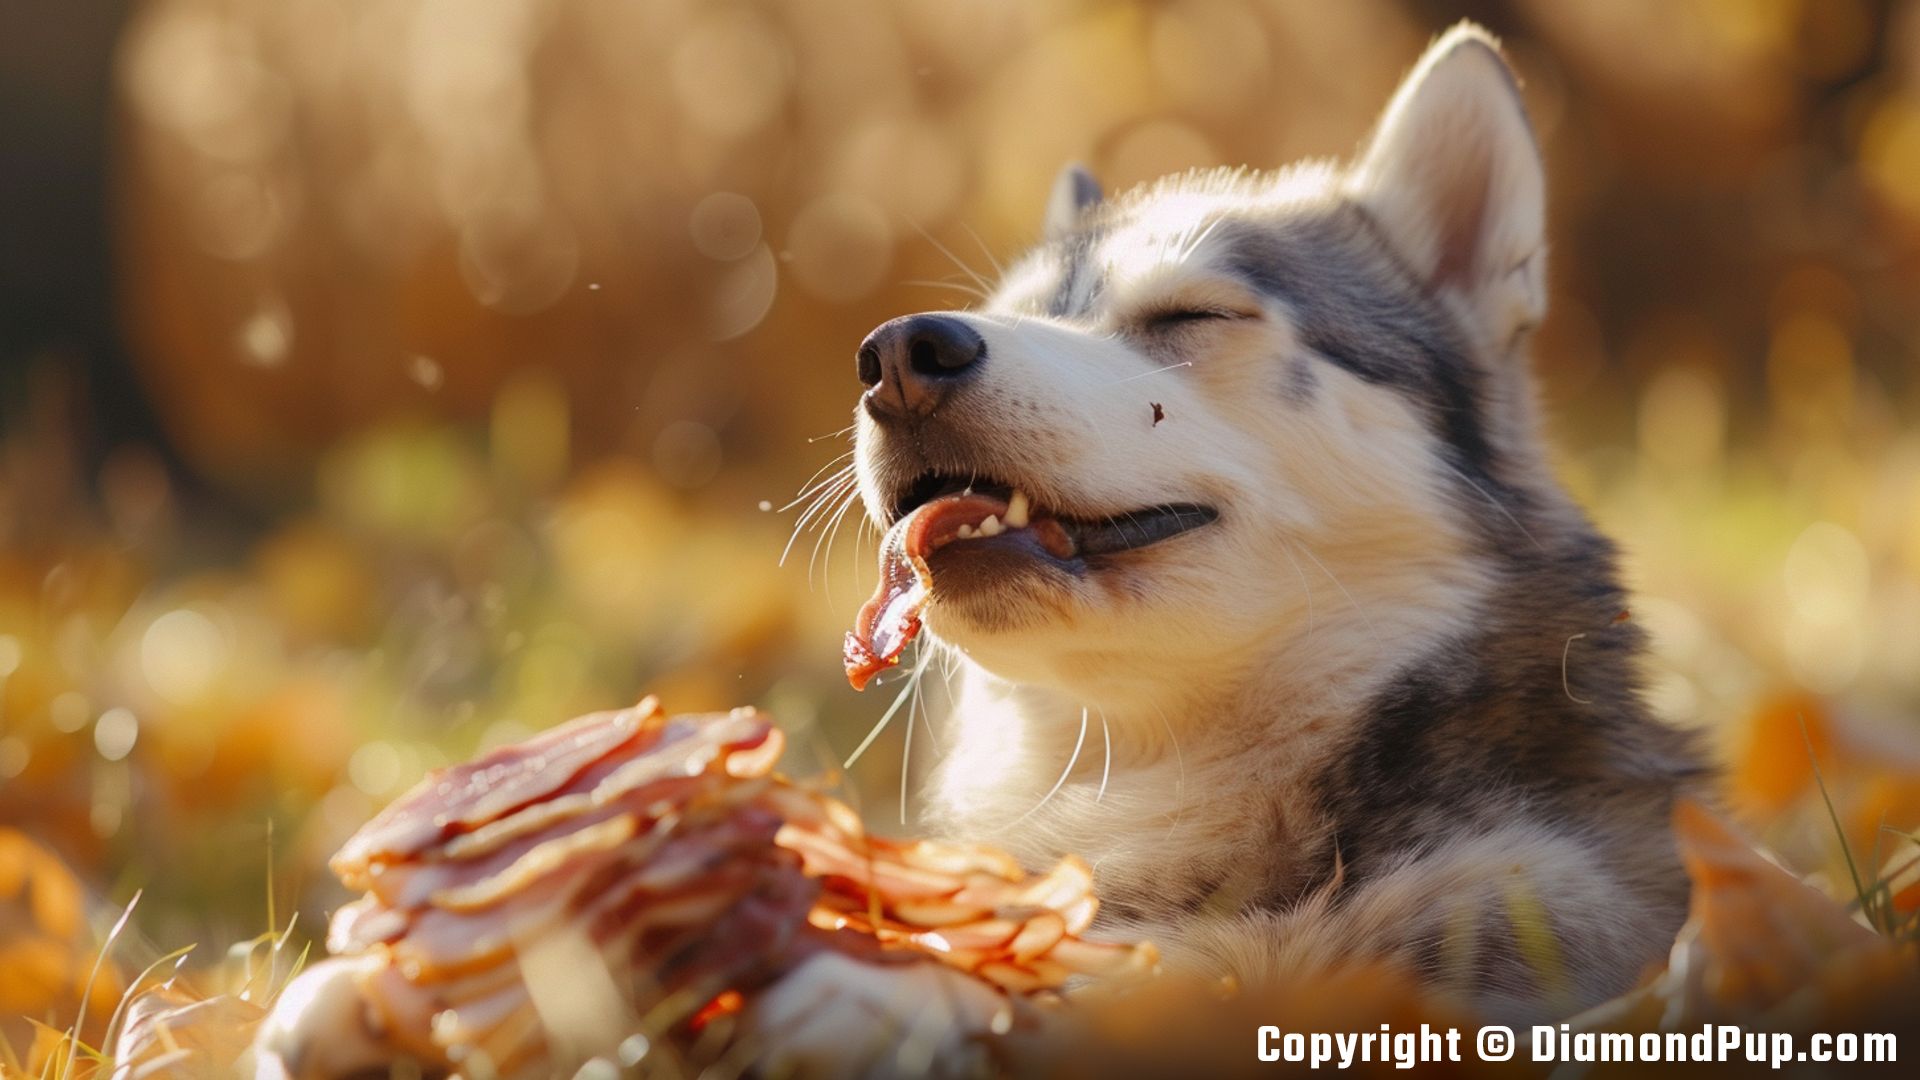 Photograph of an Adorable Husky Eating Bacon